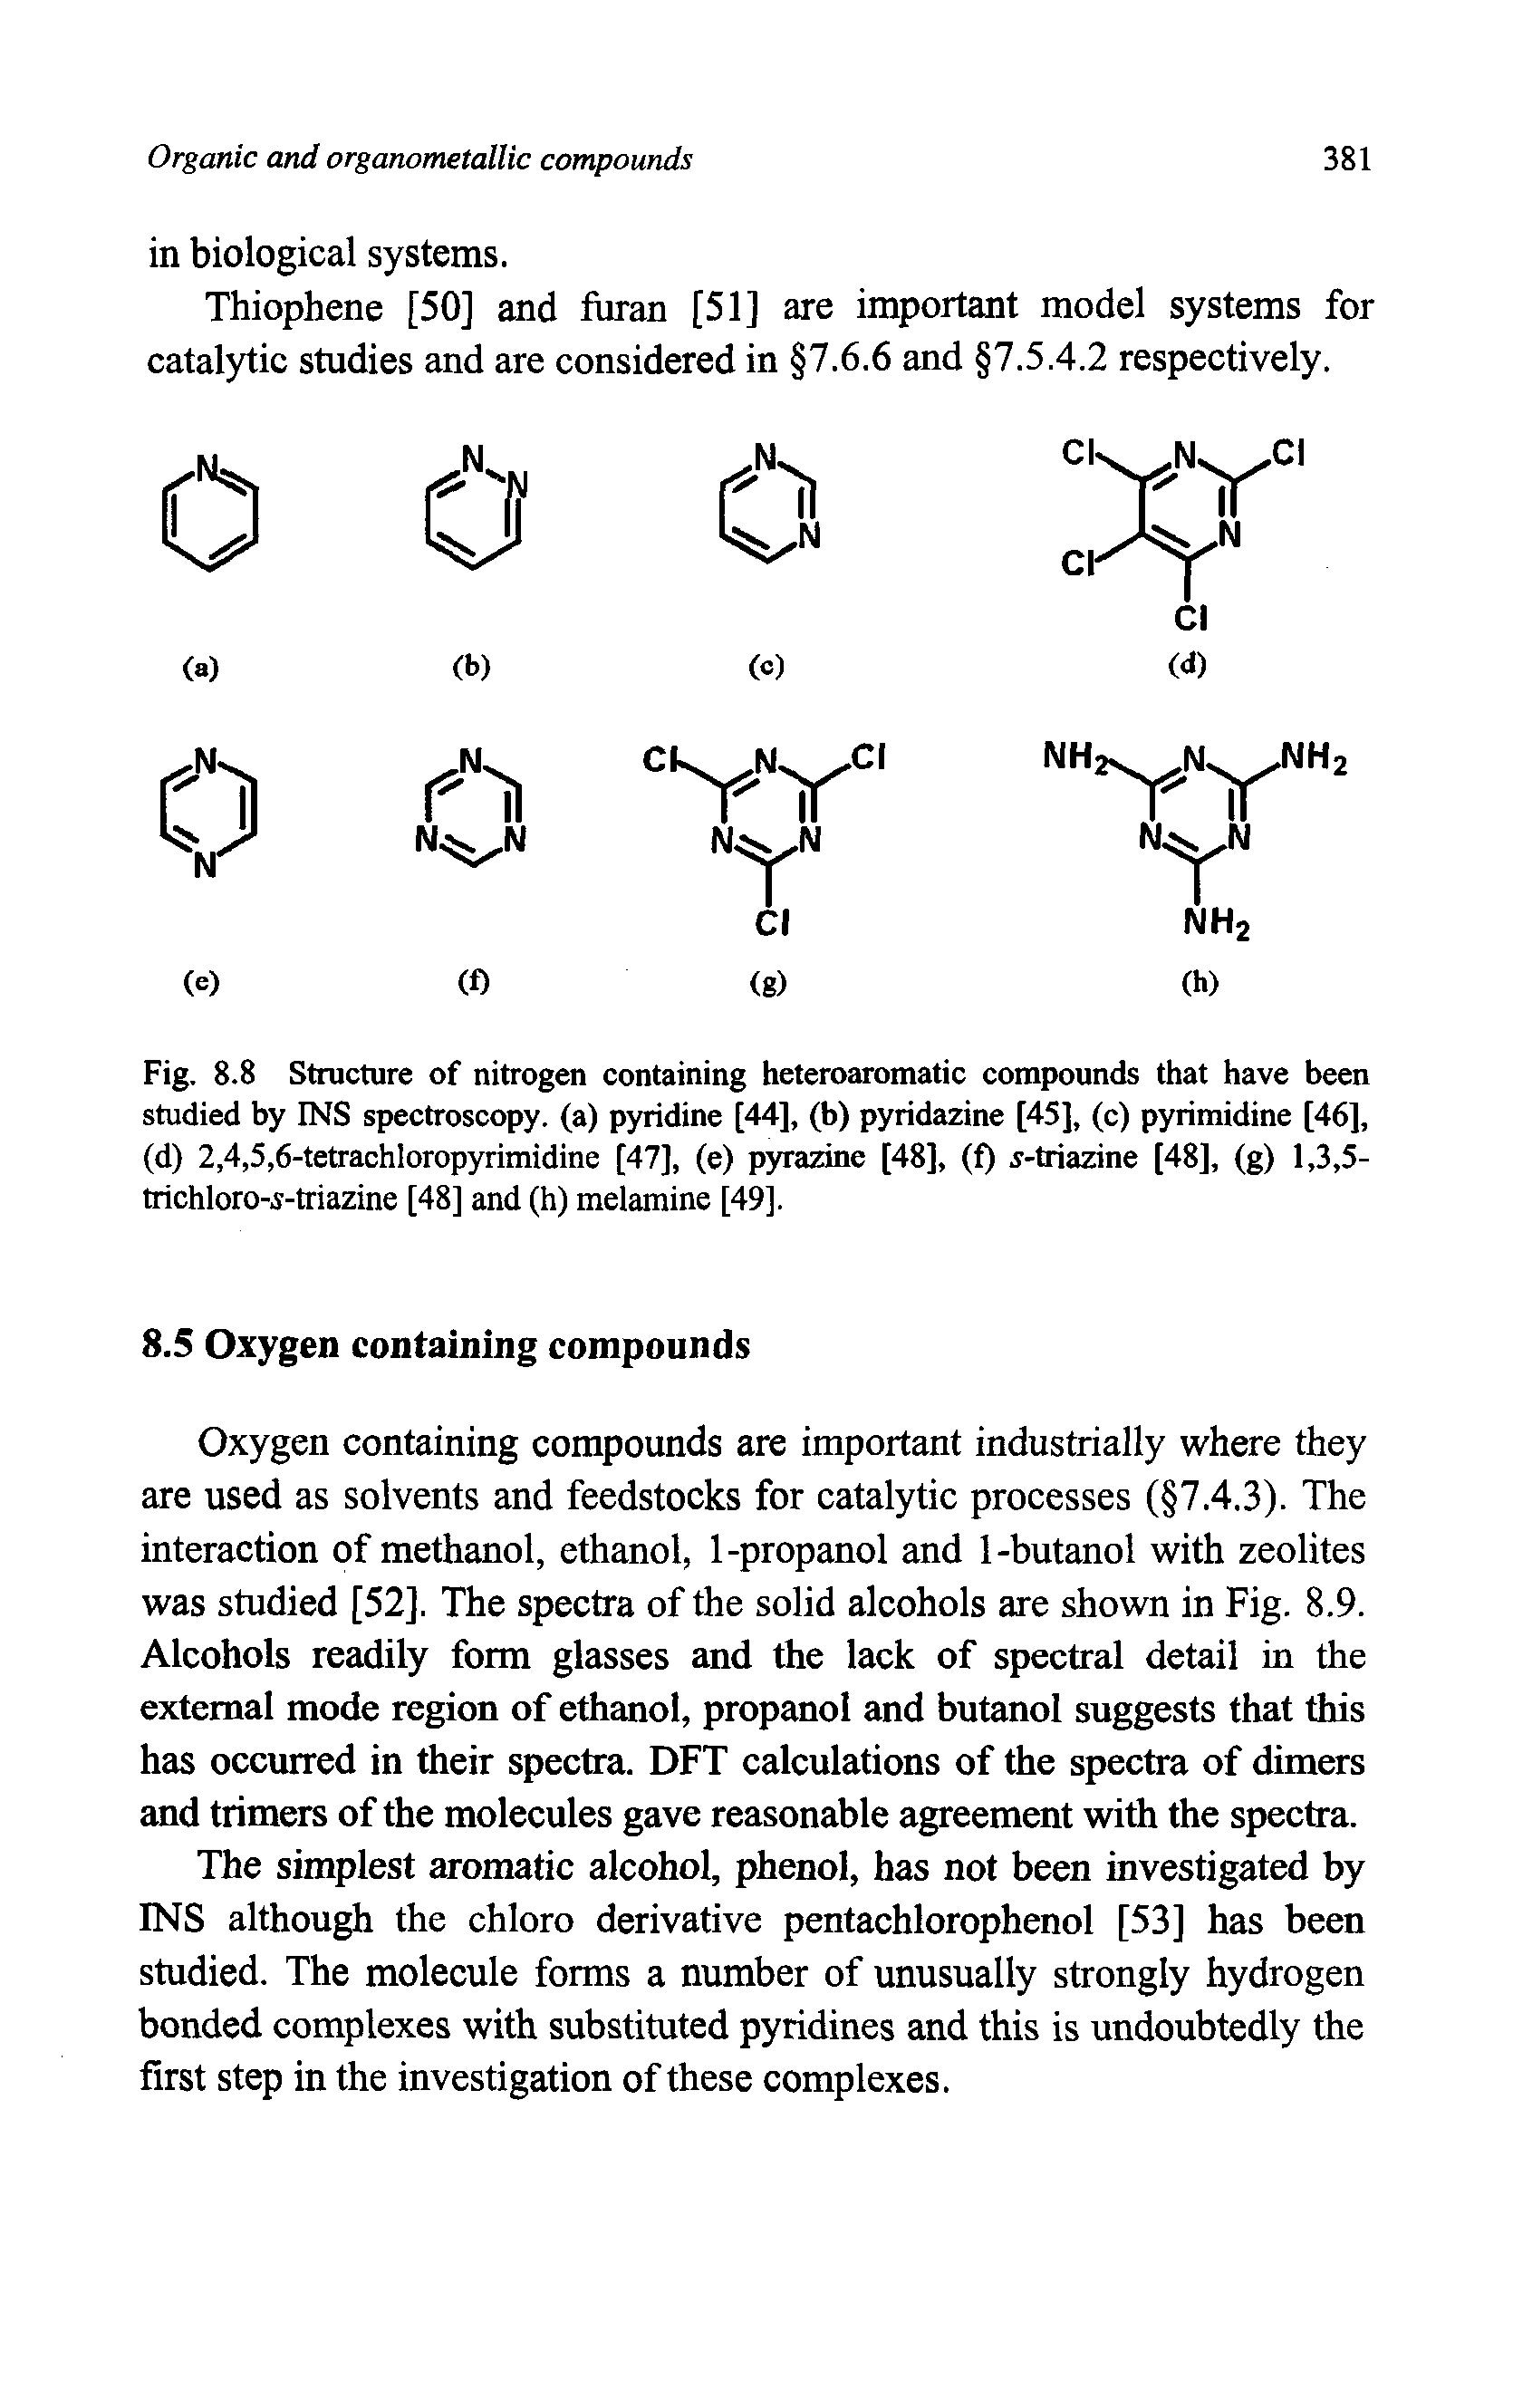 Fig. 8.8 Structure of nitrogen containing heteroaromatic compounds that have been studied by INS spectroscopy, (a) pyridine [44], (b) pyridazine [45], (c) pyrimidine [46], (d) 2,4,5,6-tetrachloropyrimidine [47], (e) pyrazine [48], (f) j-triazine [48], (g) 1,3,5-trichloro-i-triazine [48] and (h) melamine [49].